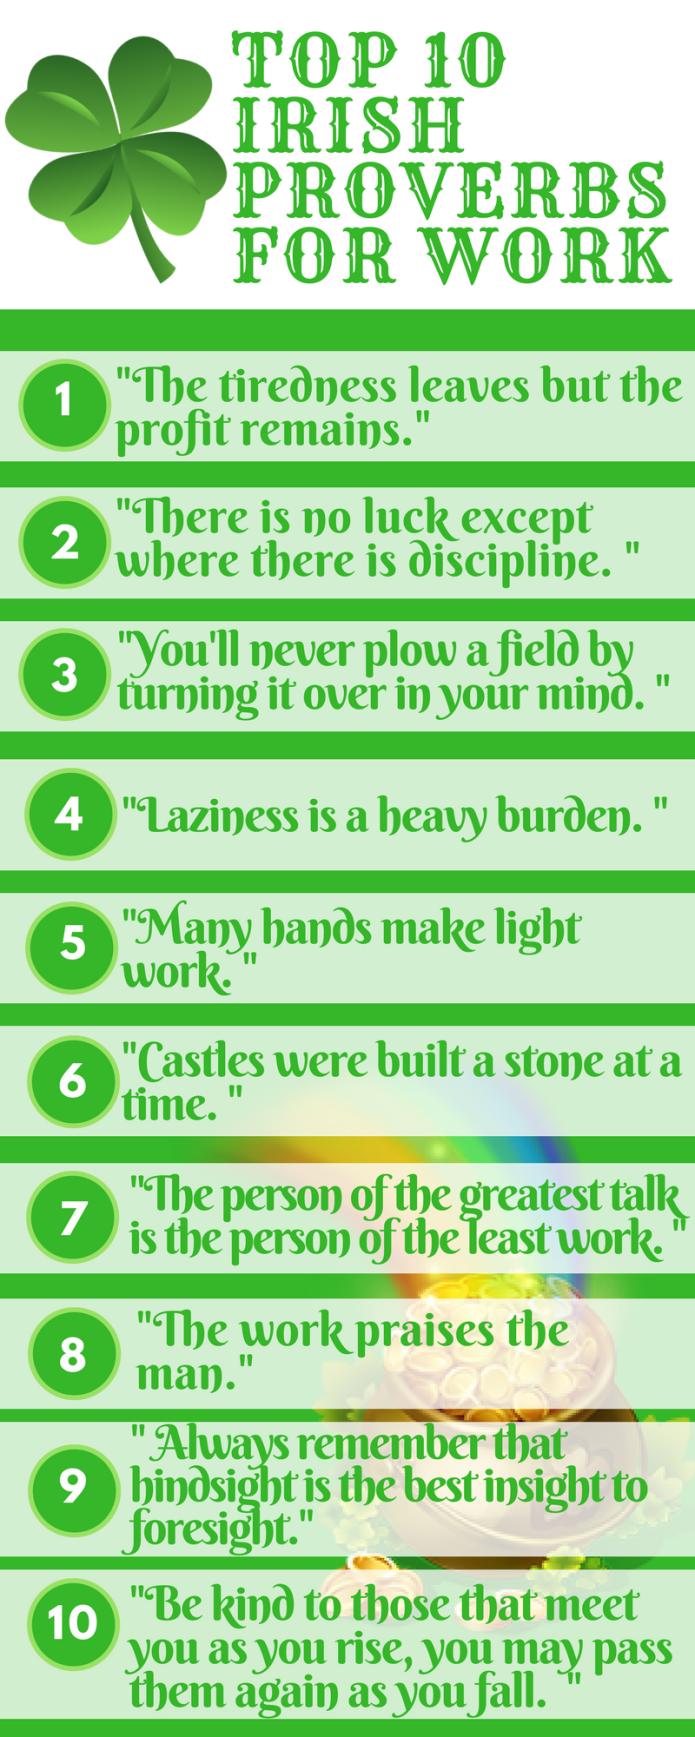 Top 10 Irish Proverbs For Work